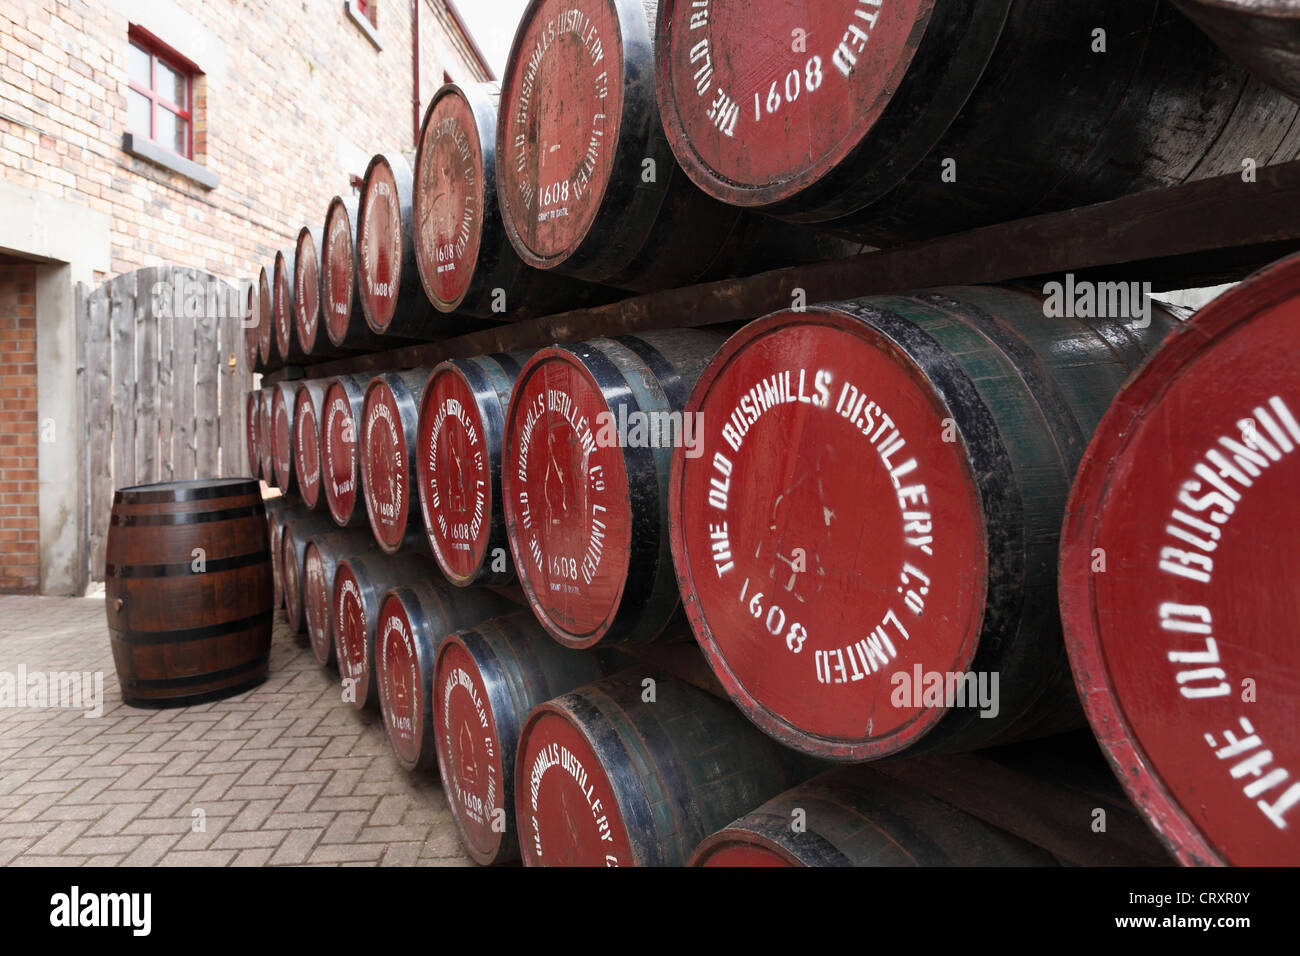 United Kingdom, Northern Ireland, County Antrim, Row of barrels Stock Photo